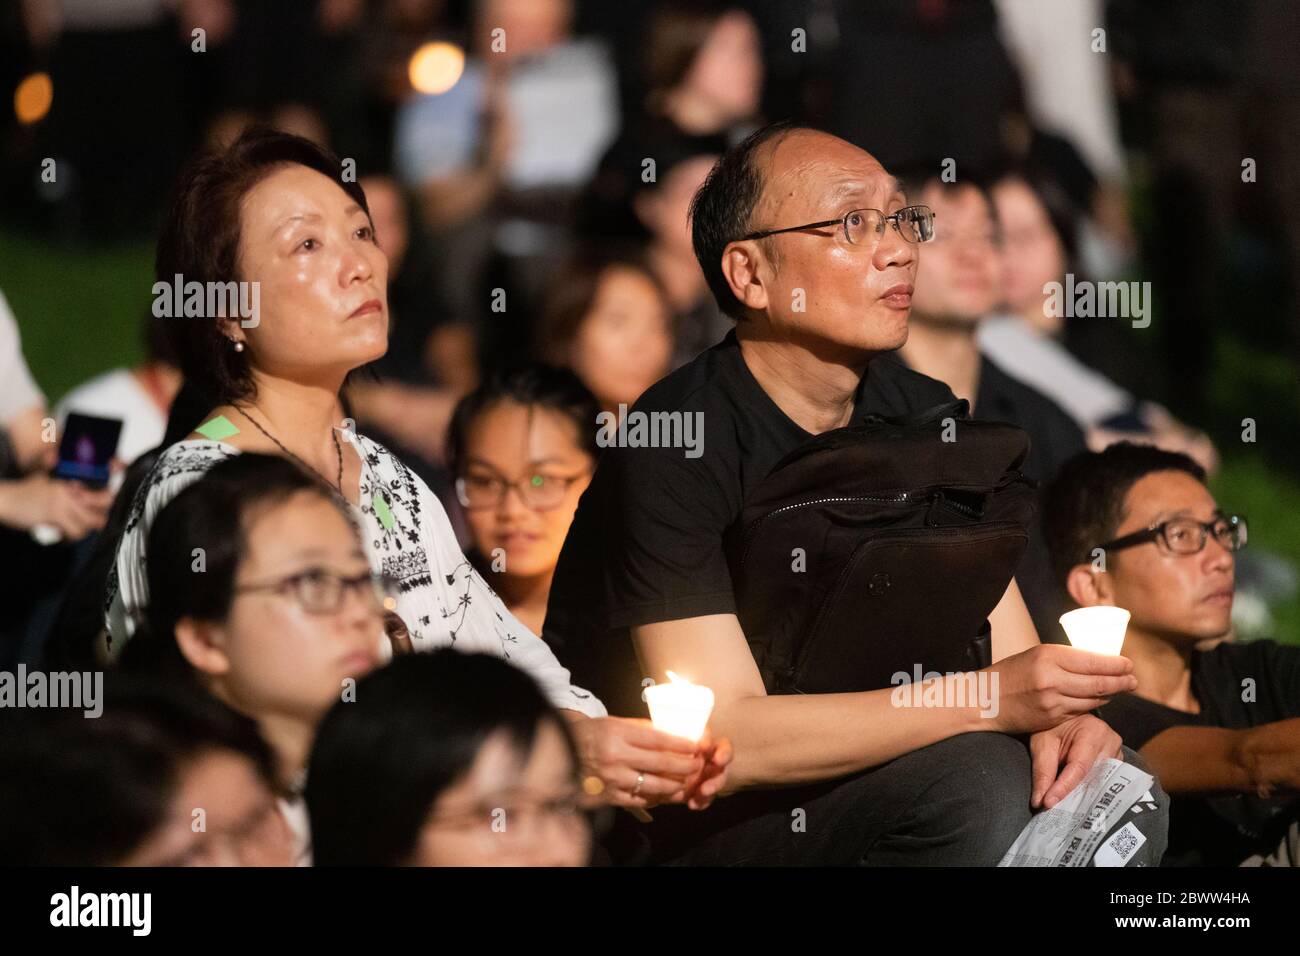 Partecipanti ad una Veglia a lume di candela a Hong Kong per le vittime del massacro di Piazza Tiananmen del 1989 tenutosi a Victoria Park, Hong Kong - 4 giugno 2019 Foto Stock